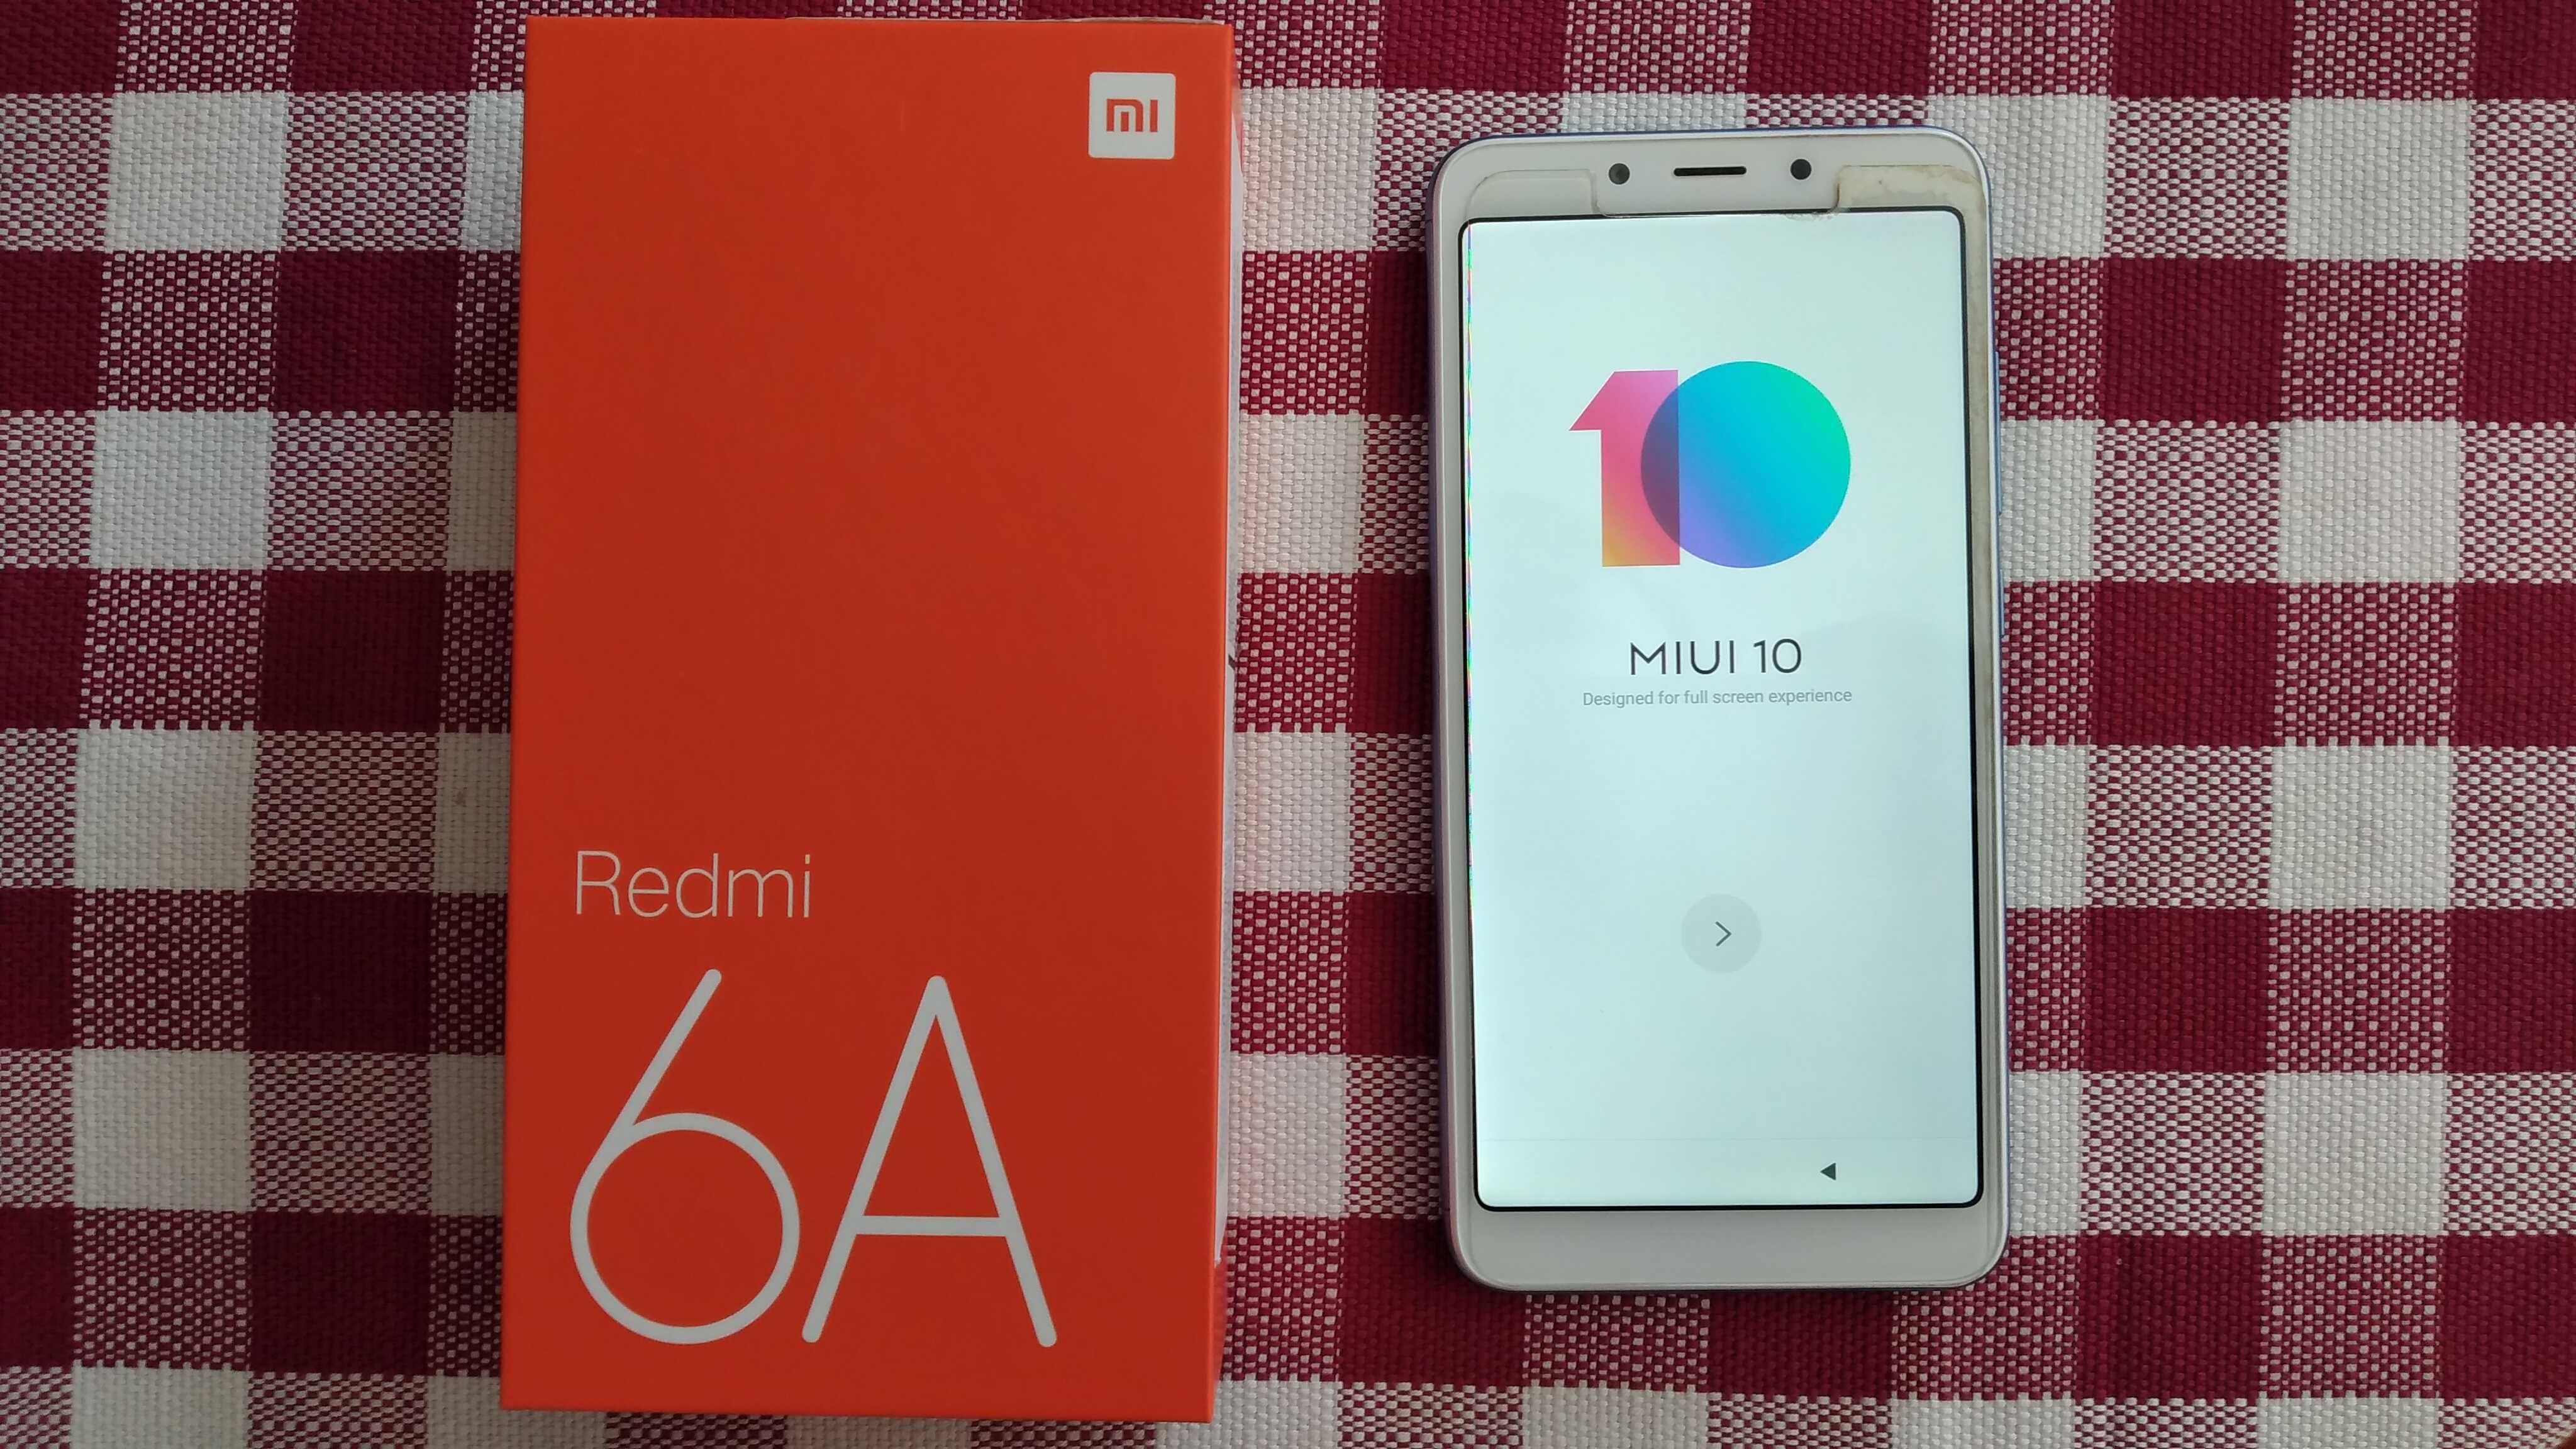 Smartfon Redmi 6A